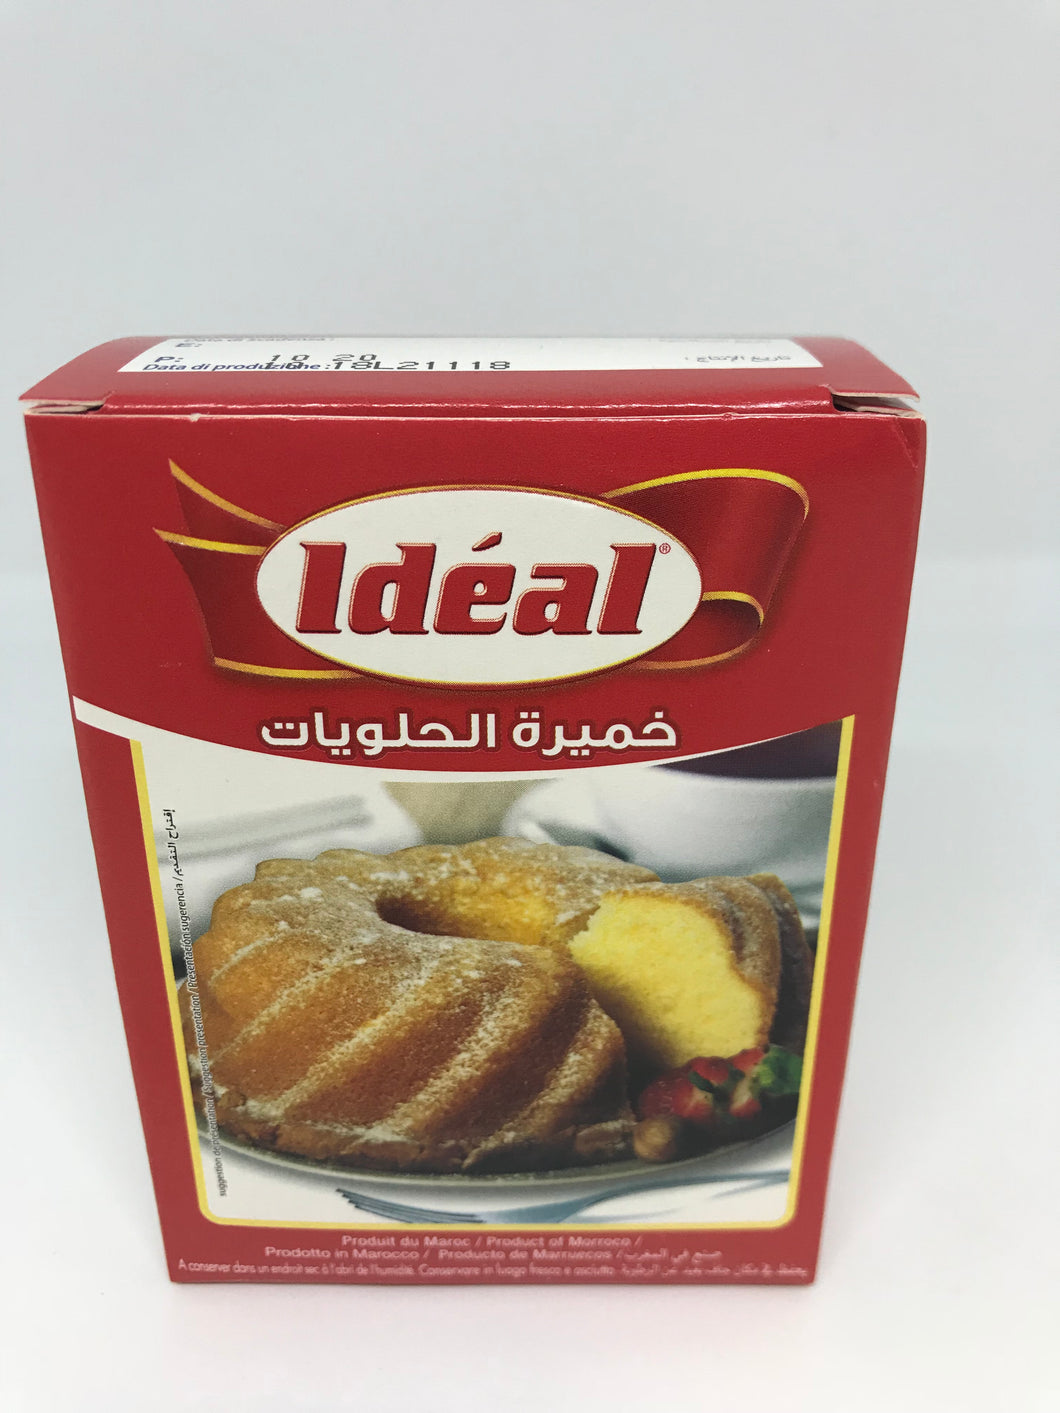 Ideal 10 Packs Levure Patissiere( Baking Powder)  75 Gram (2.64 oz)